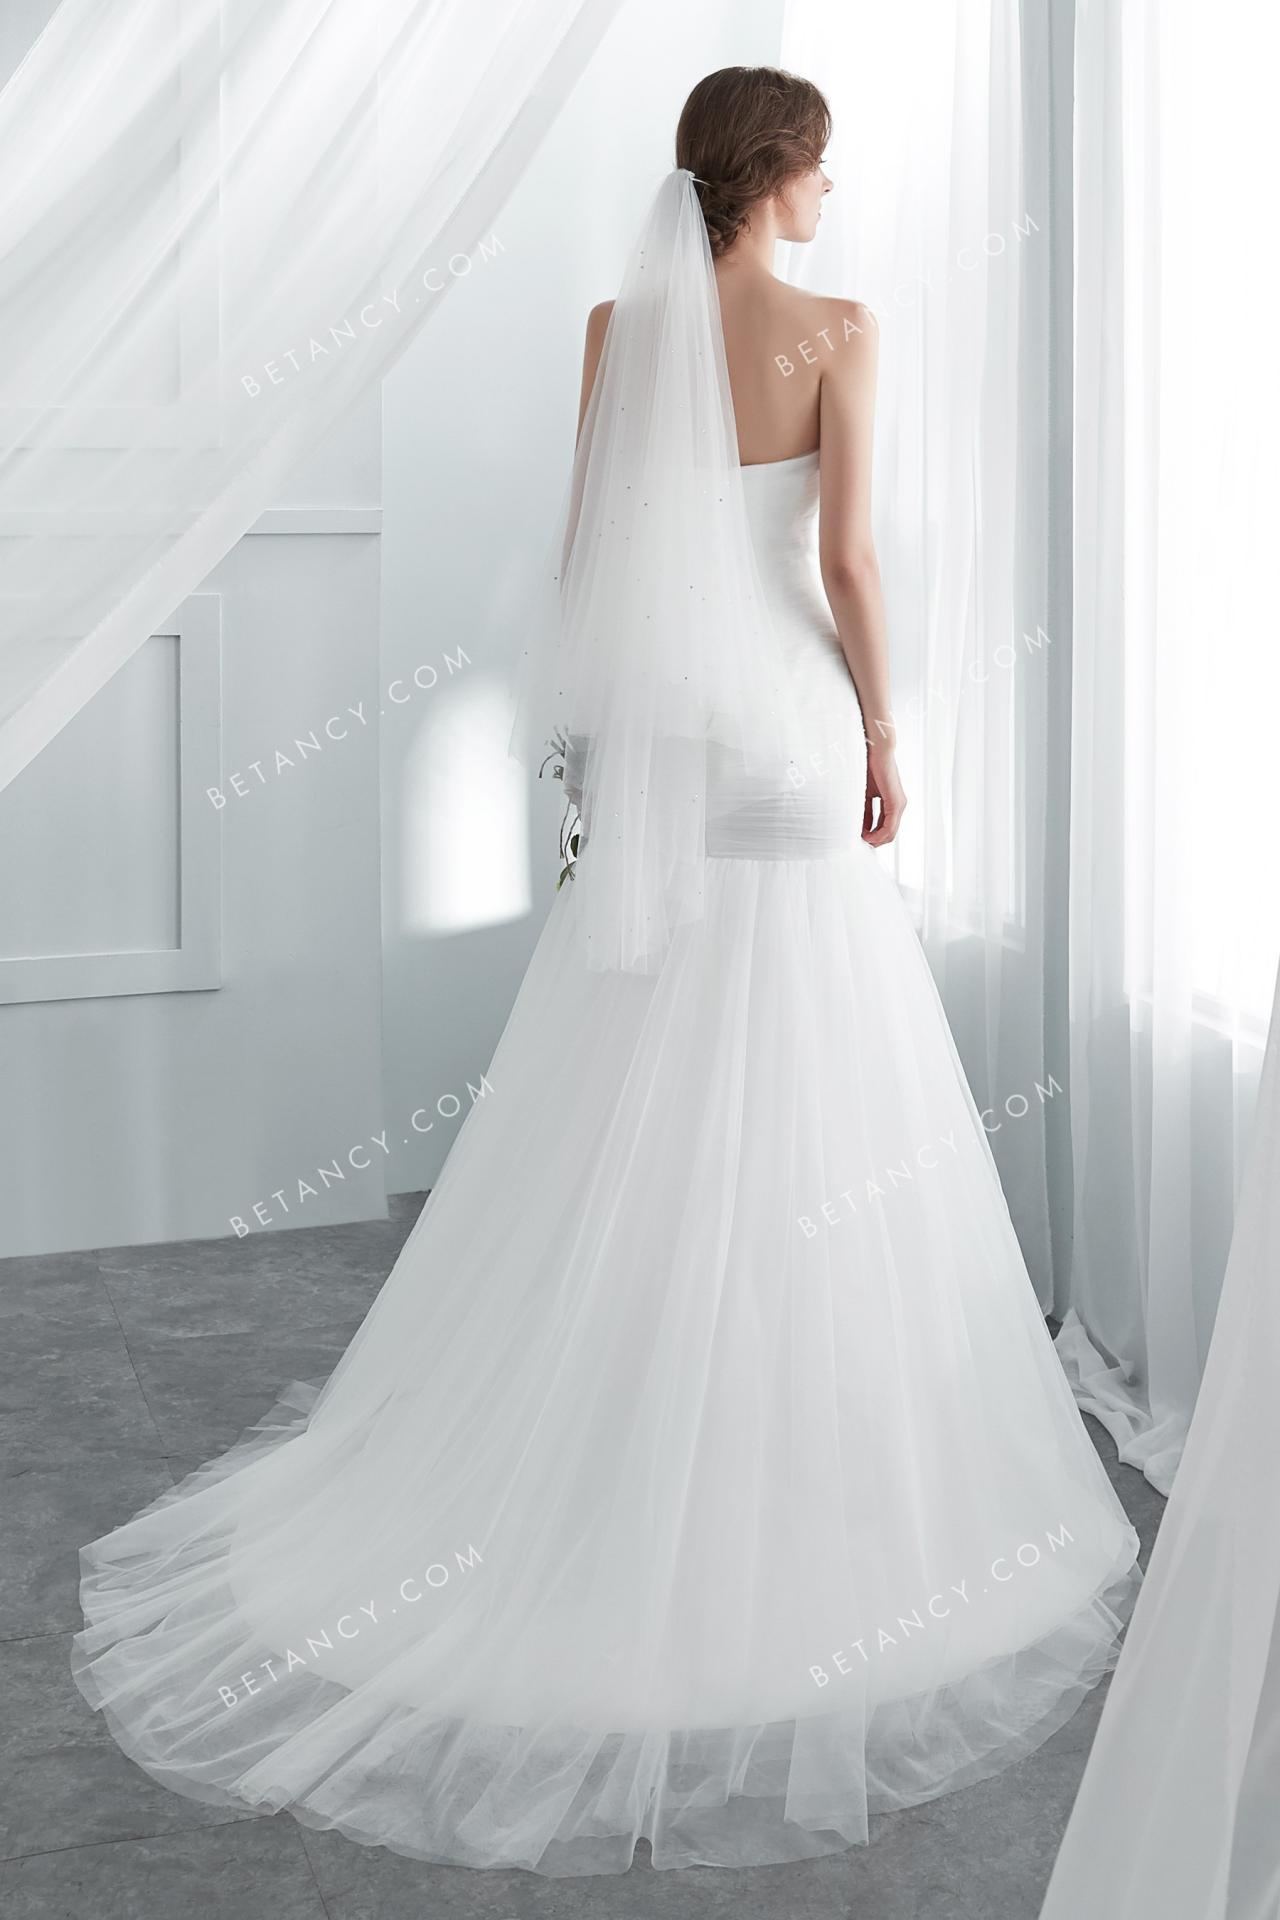 Lace up soft light ivory tulle wedding dress 3